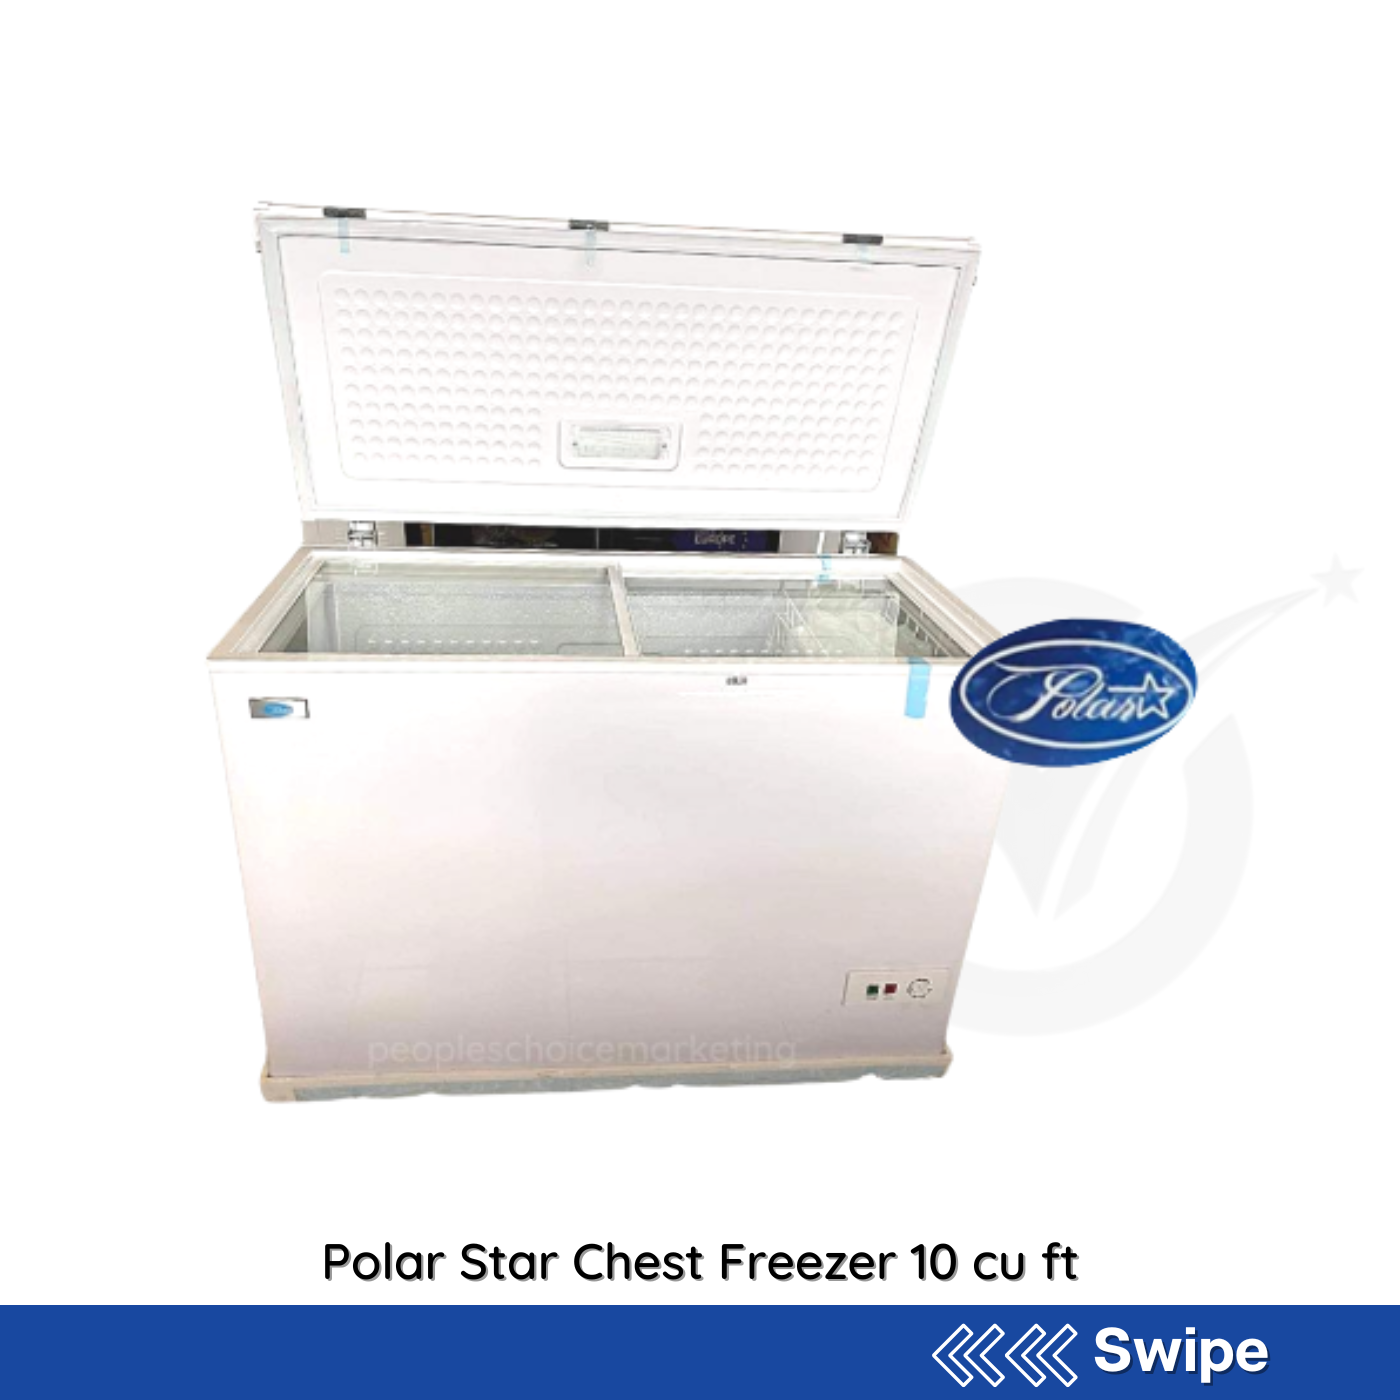 Polar Star Chest Freezer 10 cu ft – People's Choice Marketing